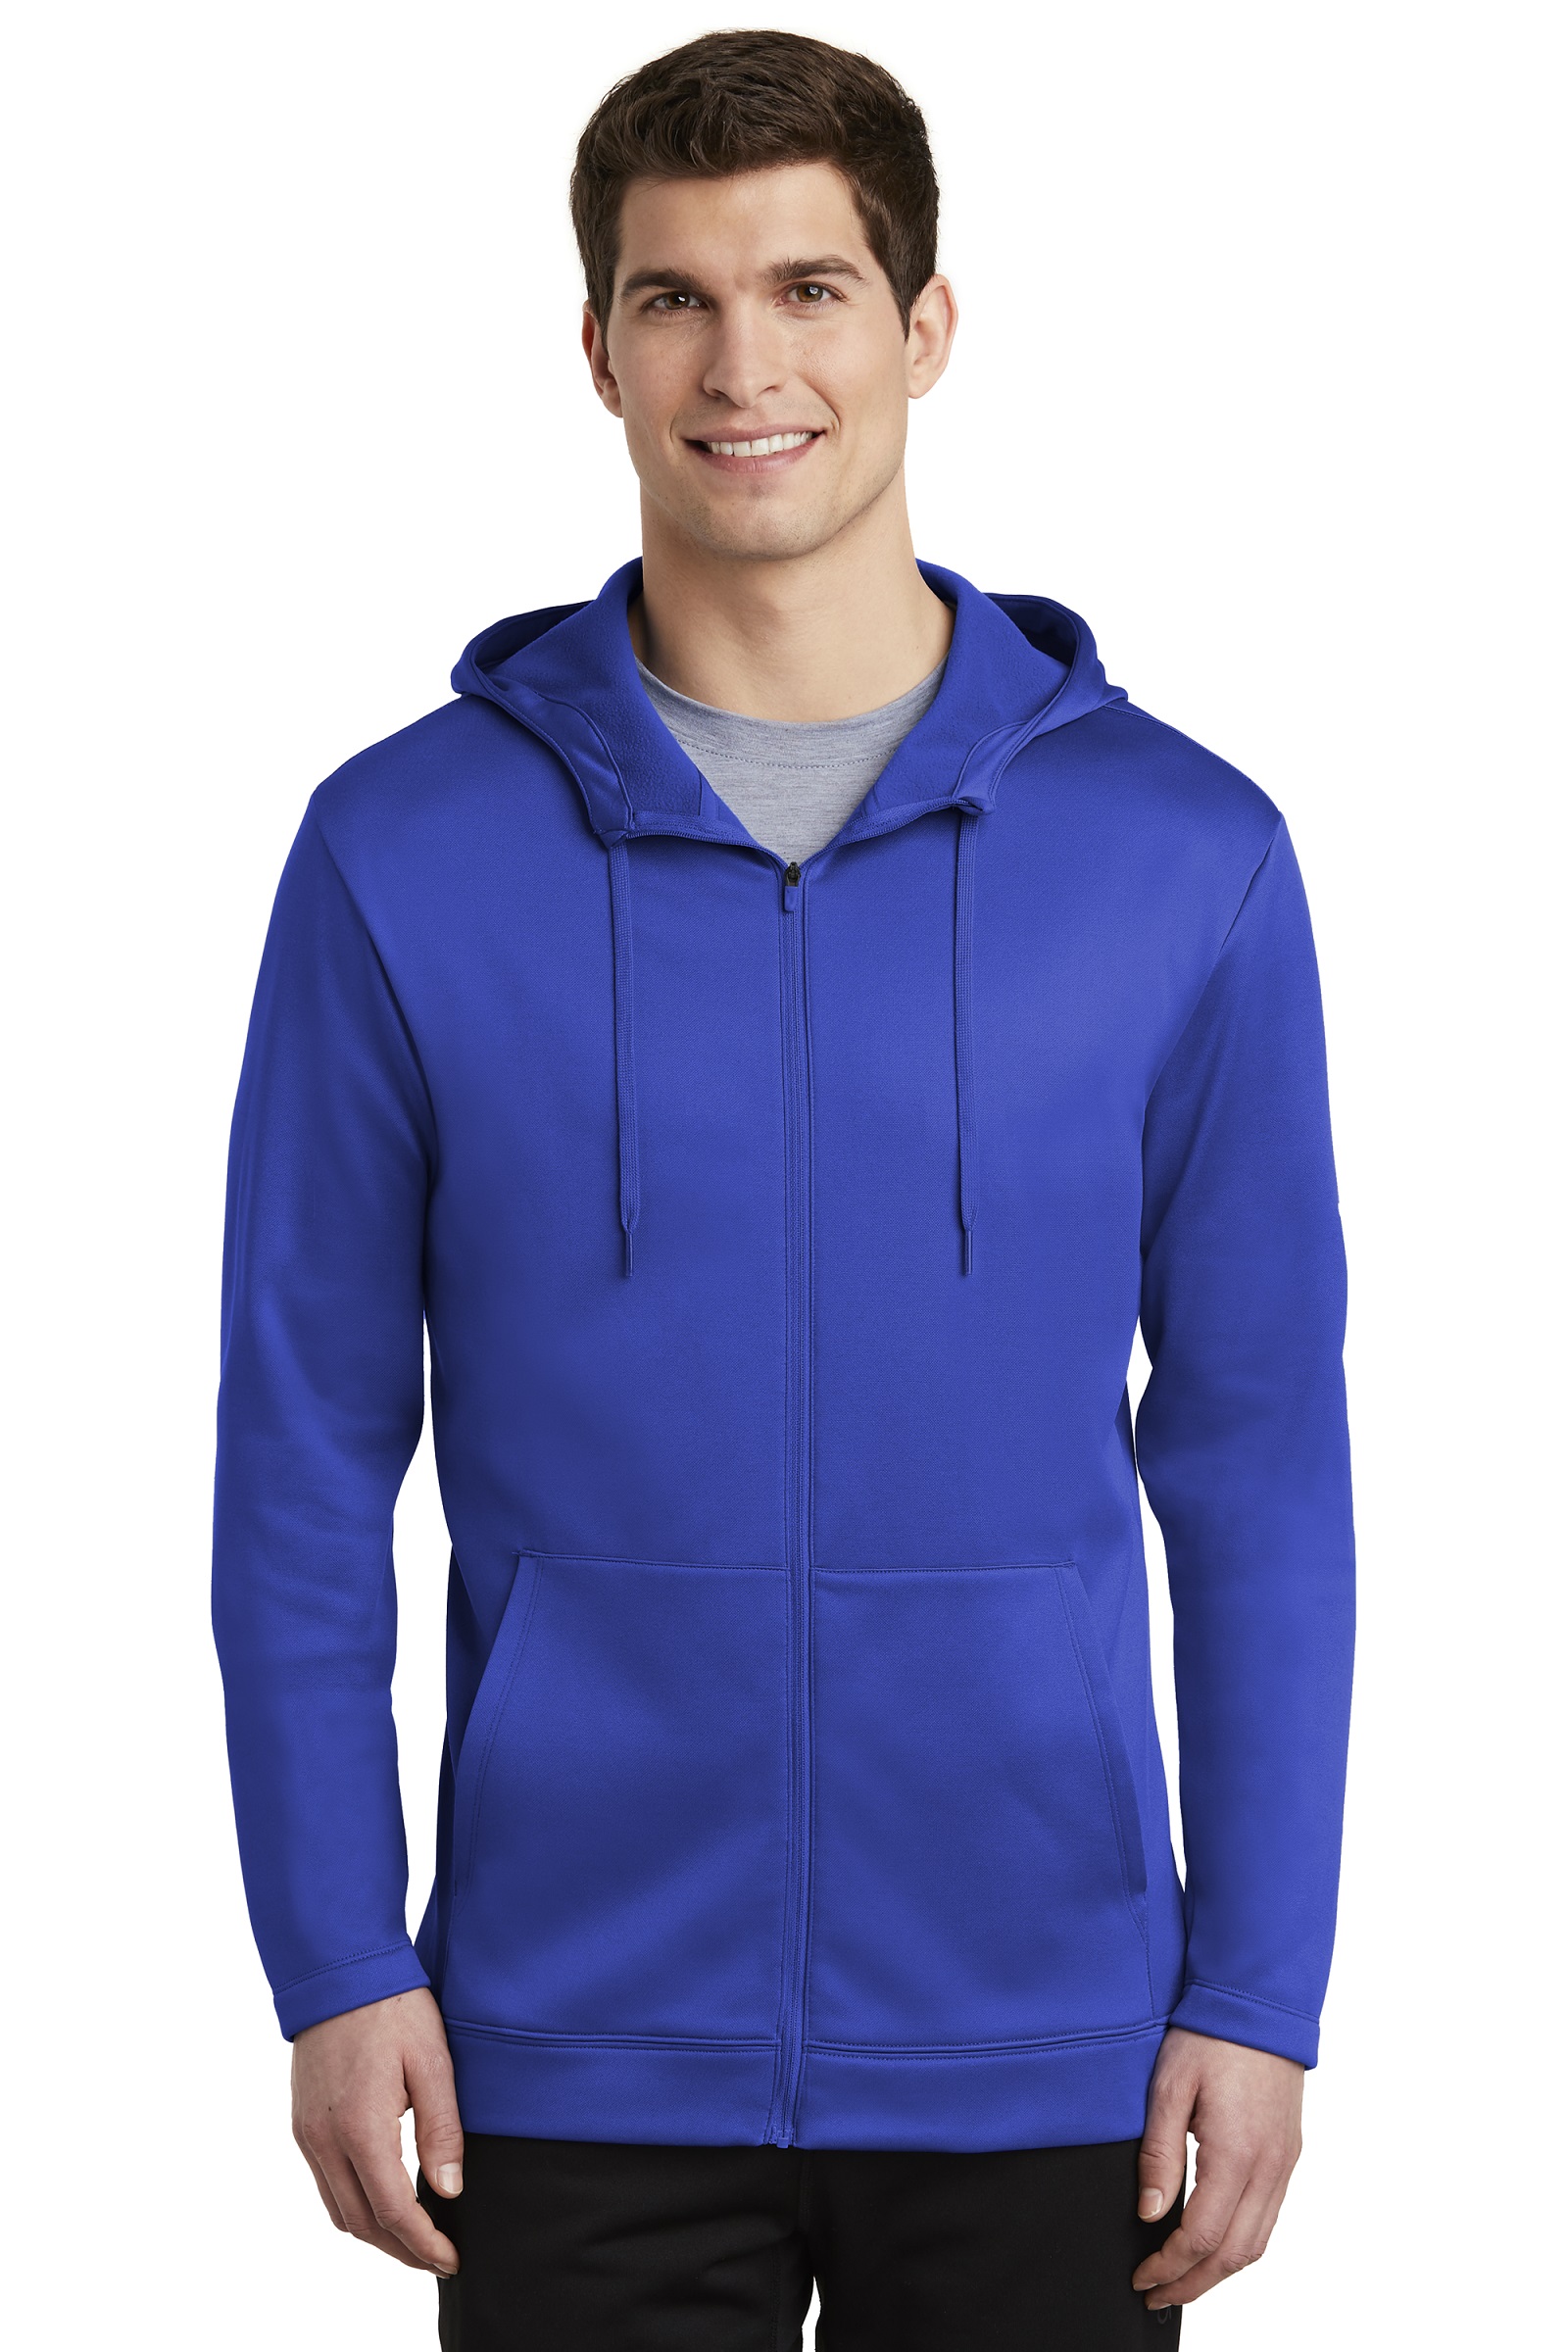 Nike Embroidered Men's Therma-FIT Full-Zip Fleece Hoodie